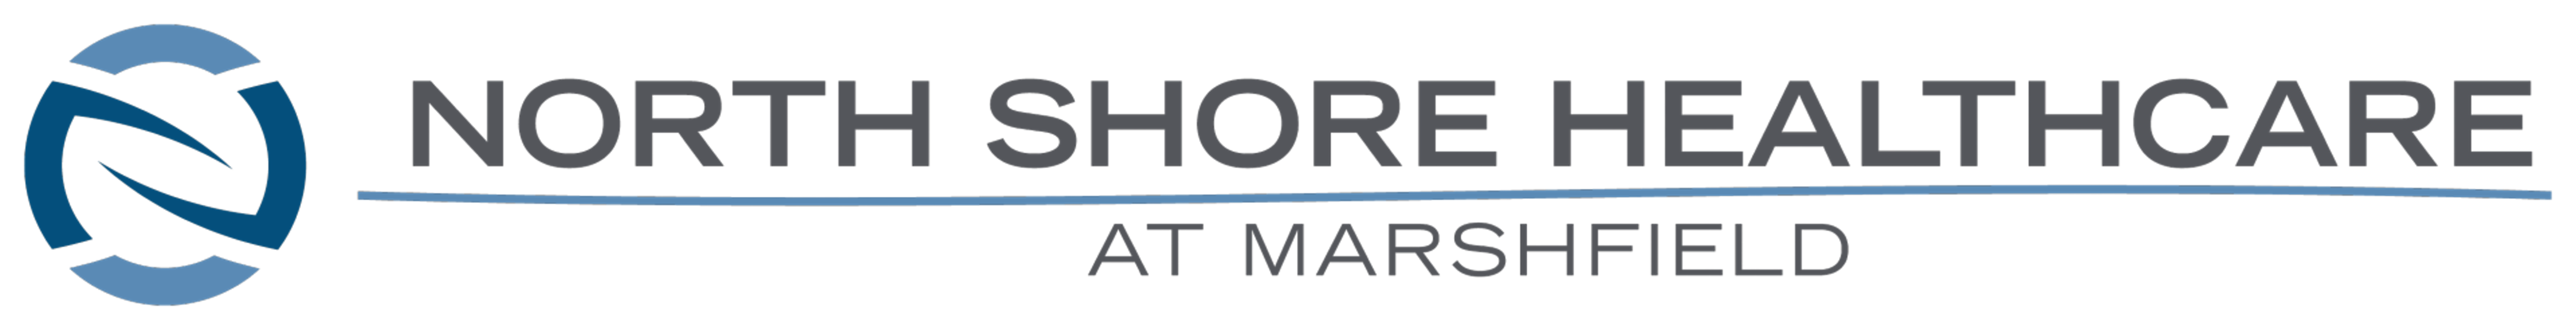 Marshfield-logo Large